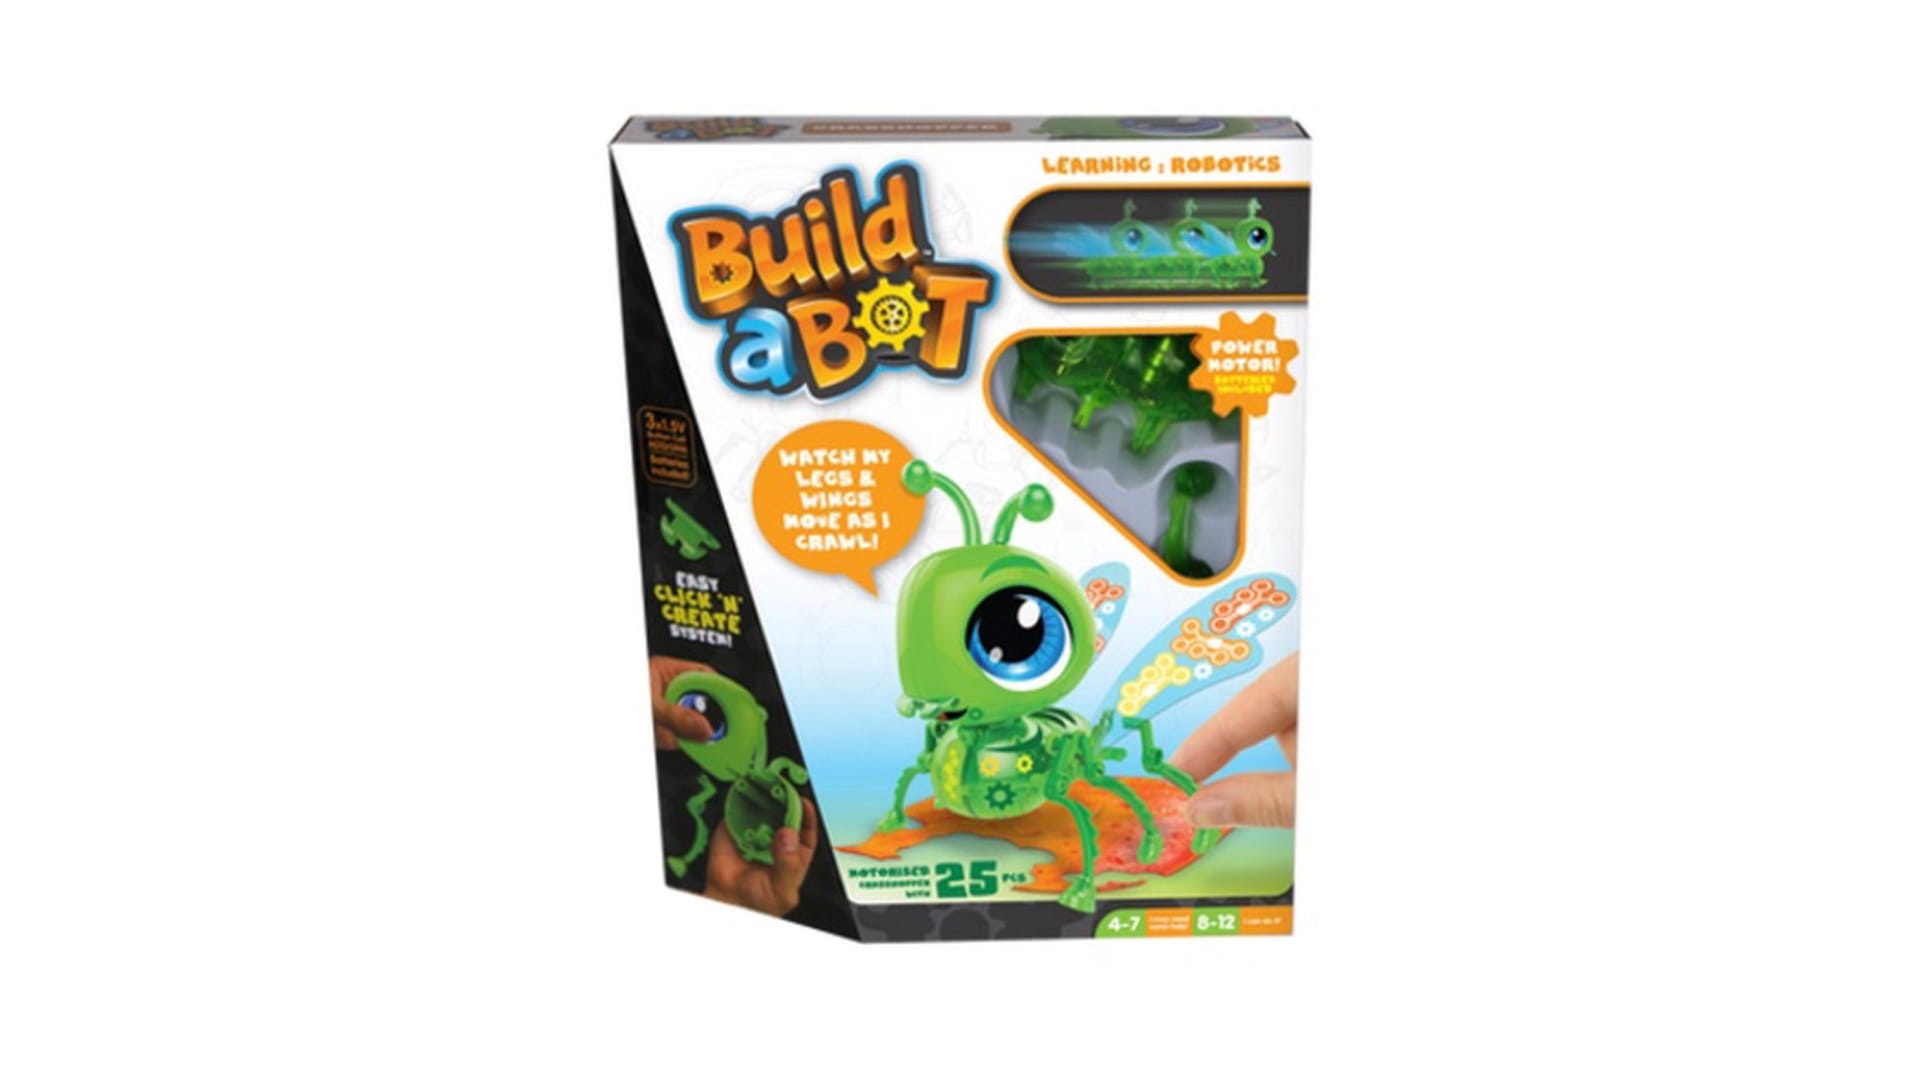 A boxed grasshopper Build A Bot